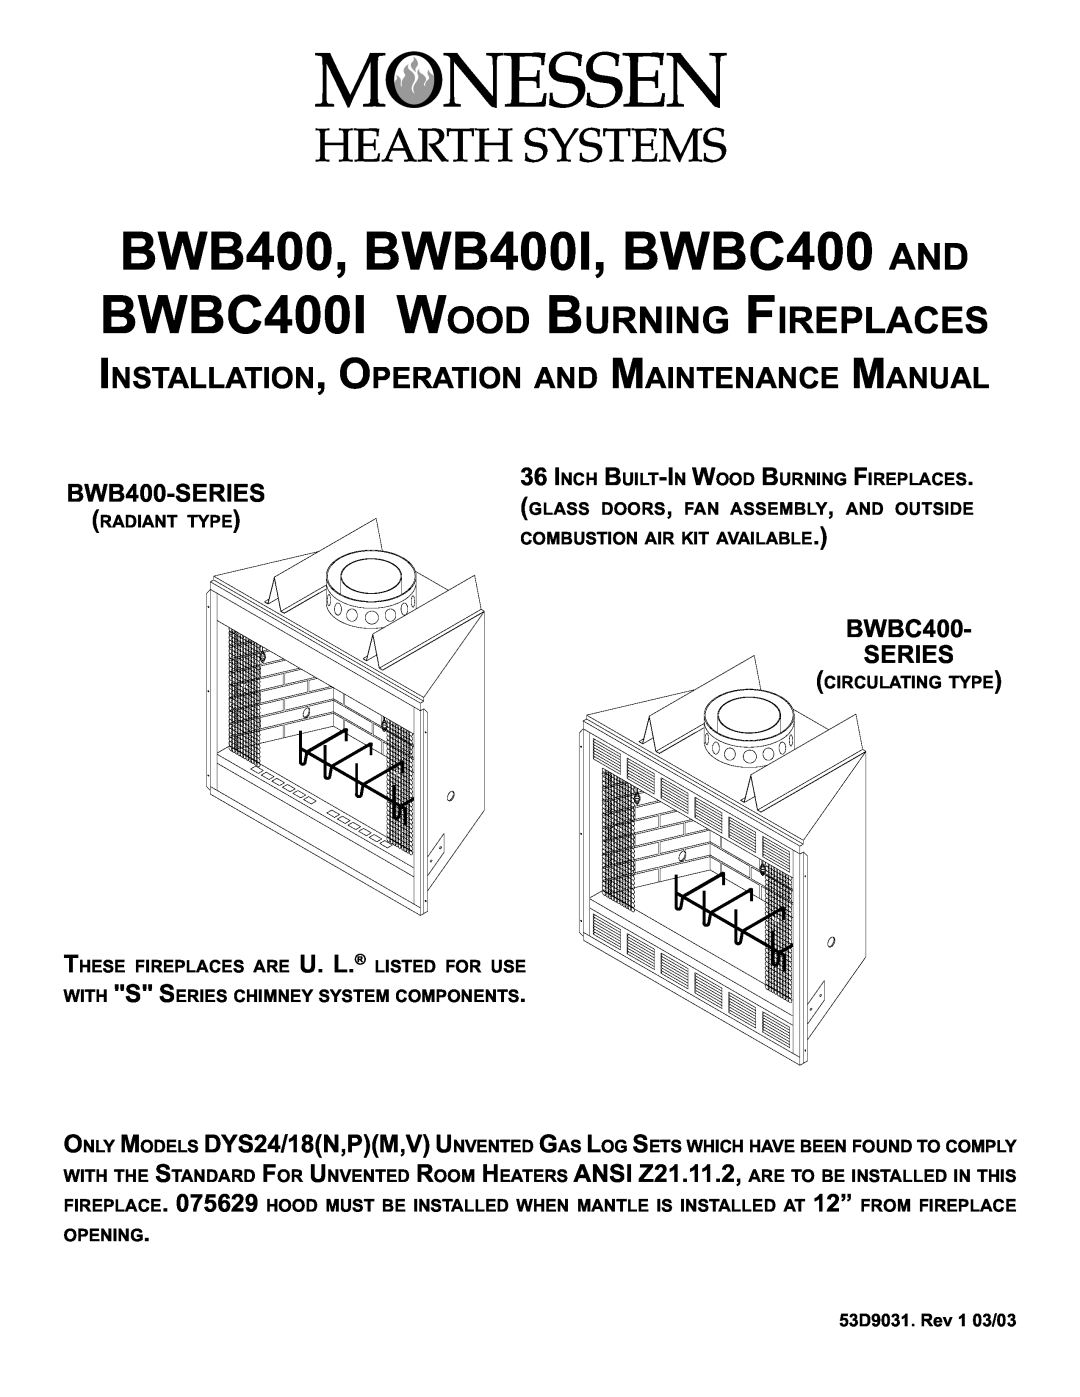 Monessen Hearth manual BWB400, BWB400I, BWBC400 AND, BWBC400I WOOD BURNING FIREPLACES, BWB400-SERIES, BWBC400 SERIES 